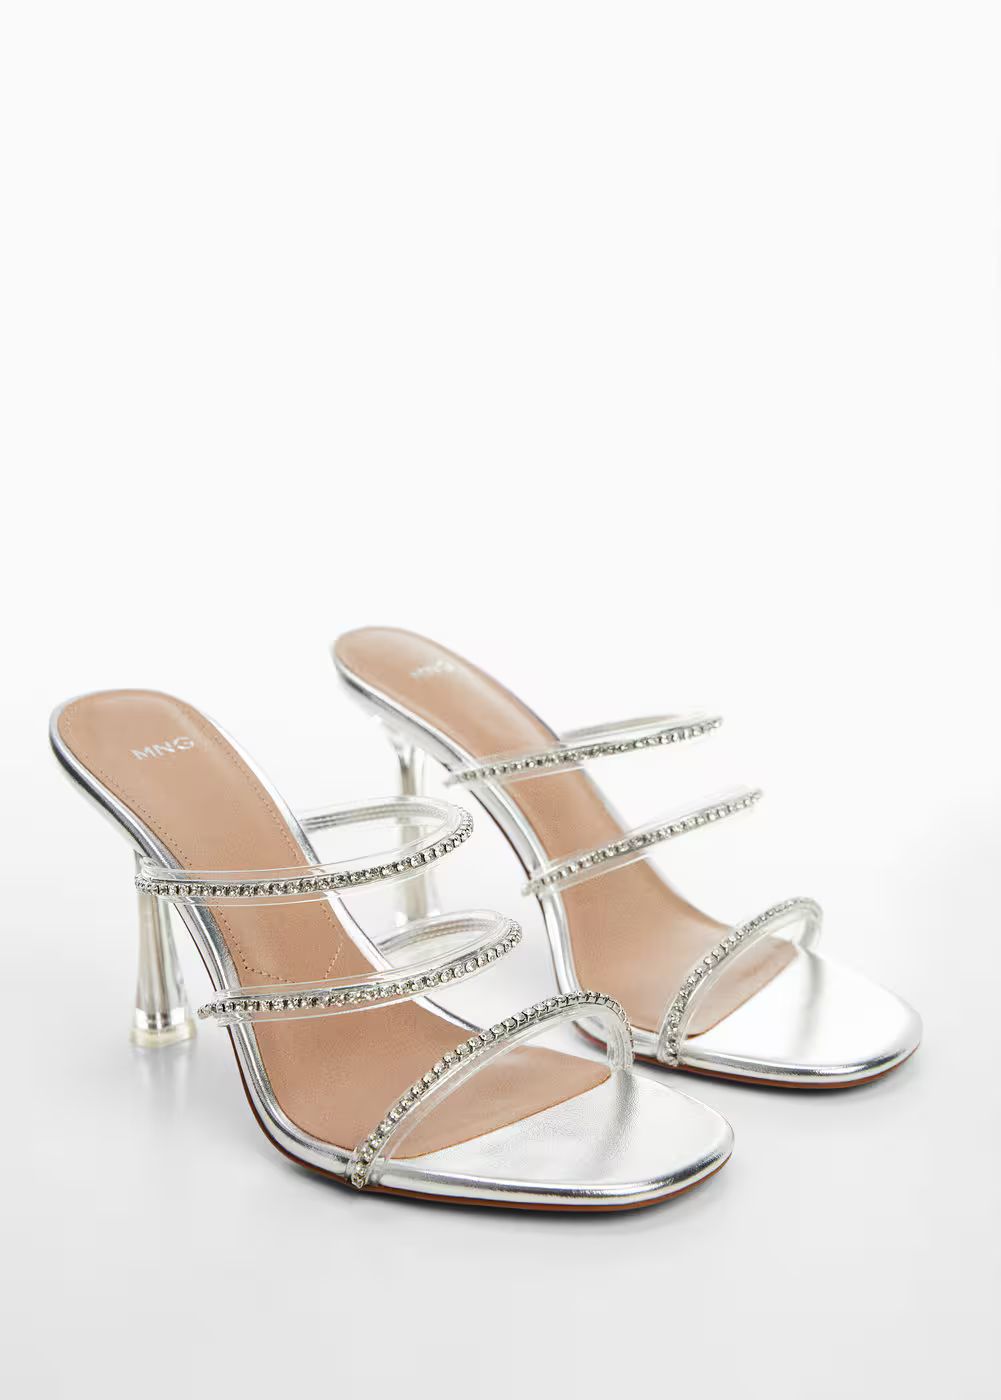 Heeled sandals with rhinestone straps | Mango Canada